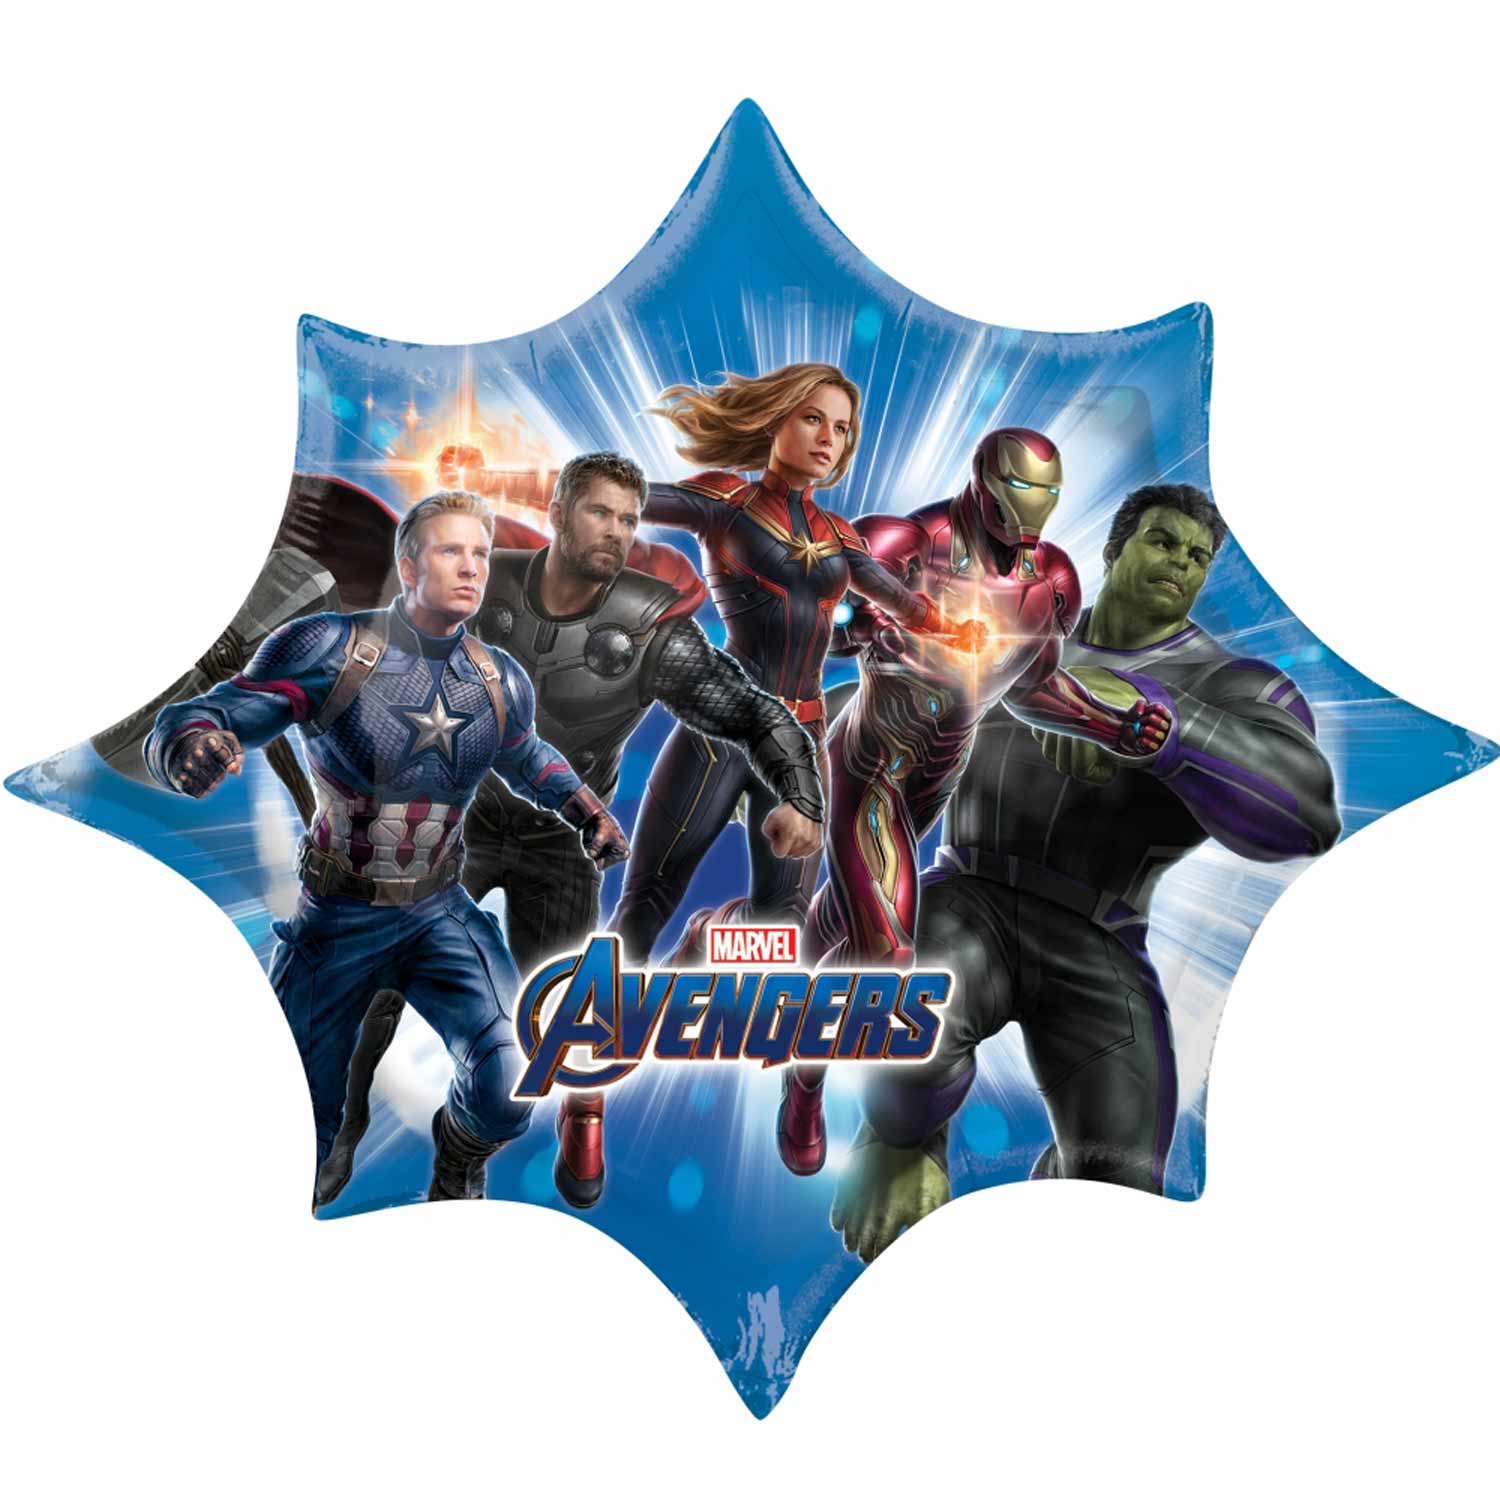 Avengers Endgame SuperShape 88x73cm Balloons & Streamers - Party Centre